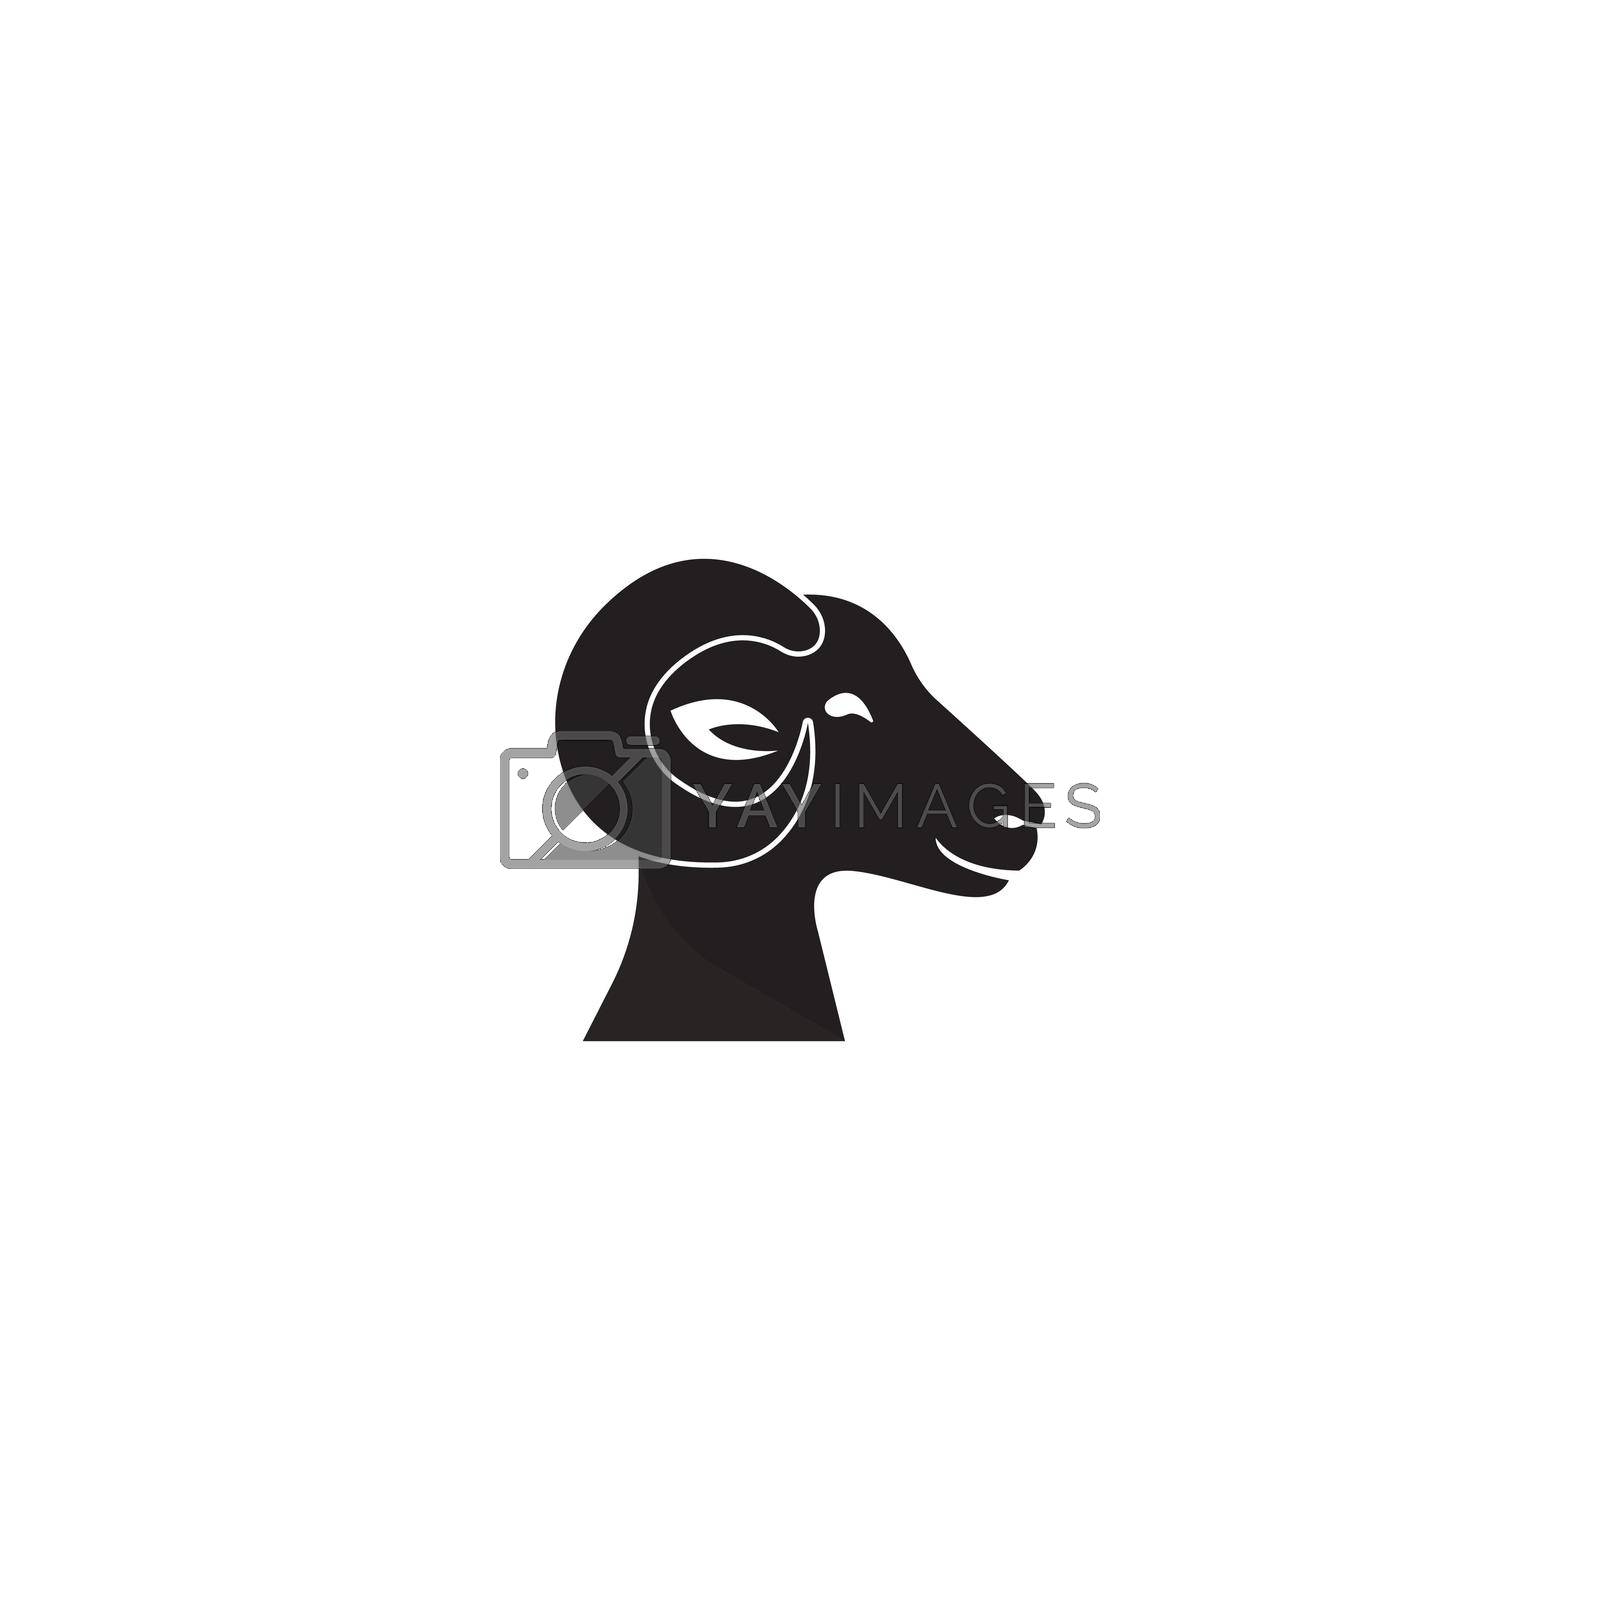 Royalty free image of goat logo  by rnking